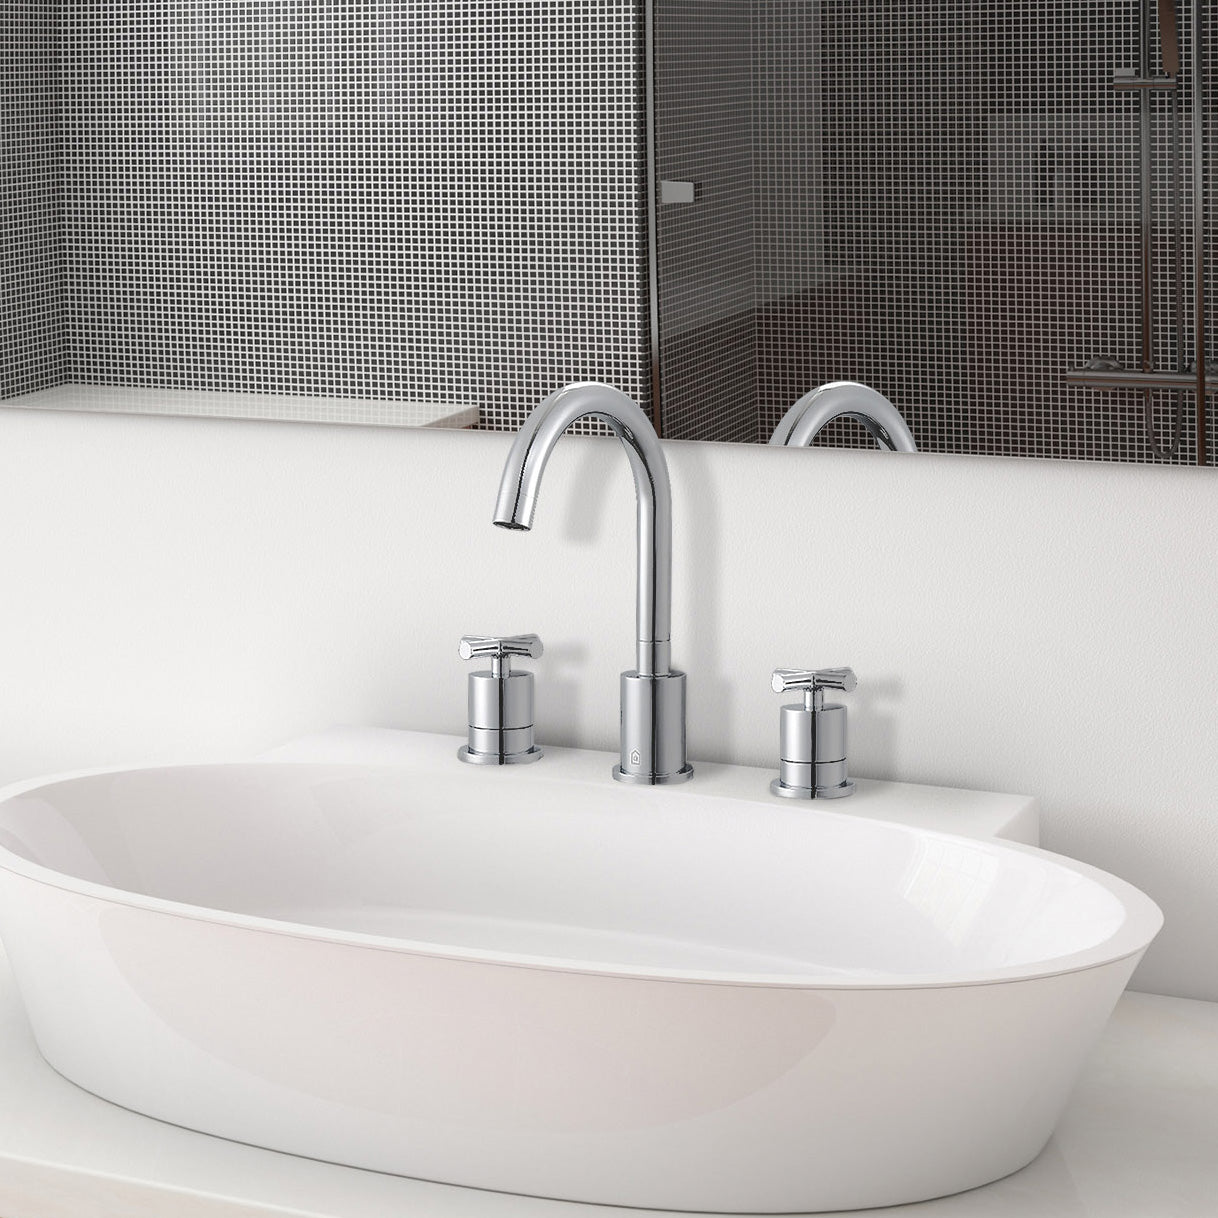 Ancona Ava Series Widespread Cross Handle Bathroom Faucet in Chrome